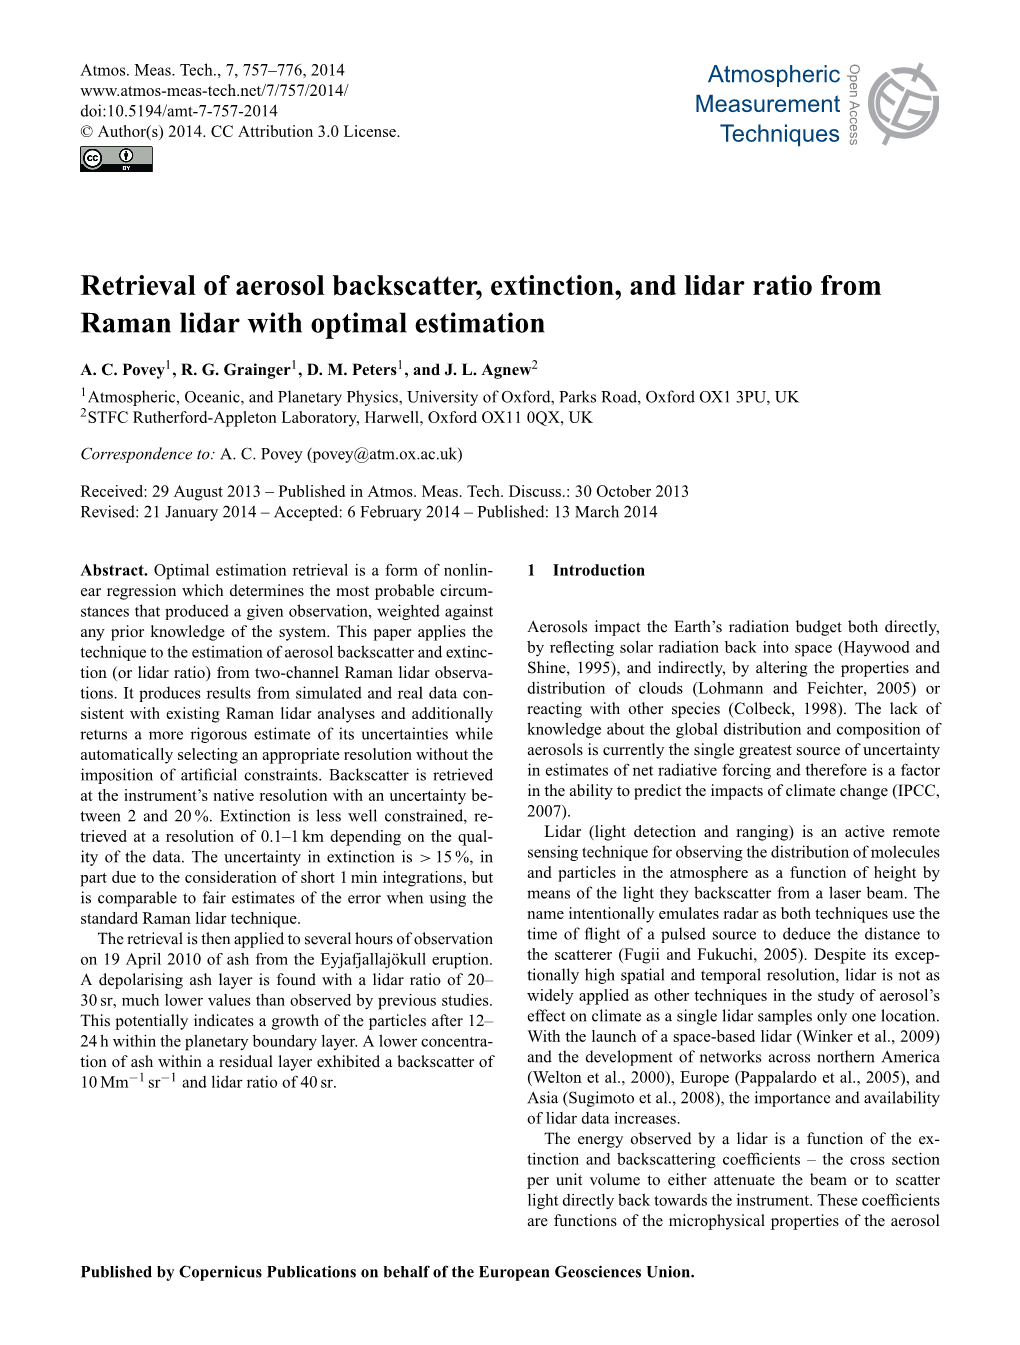 Retrieval of Aerosol Backscatter, Extinction, and Lidar Ratio from Raman Lidar with Optimal Estimation